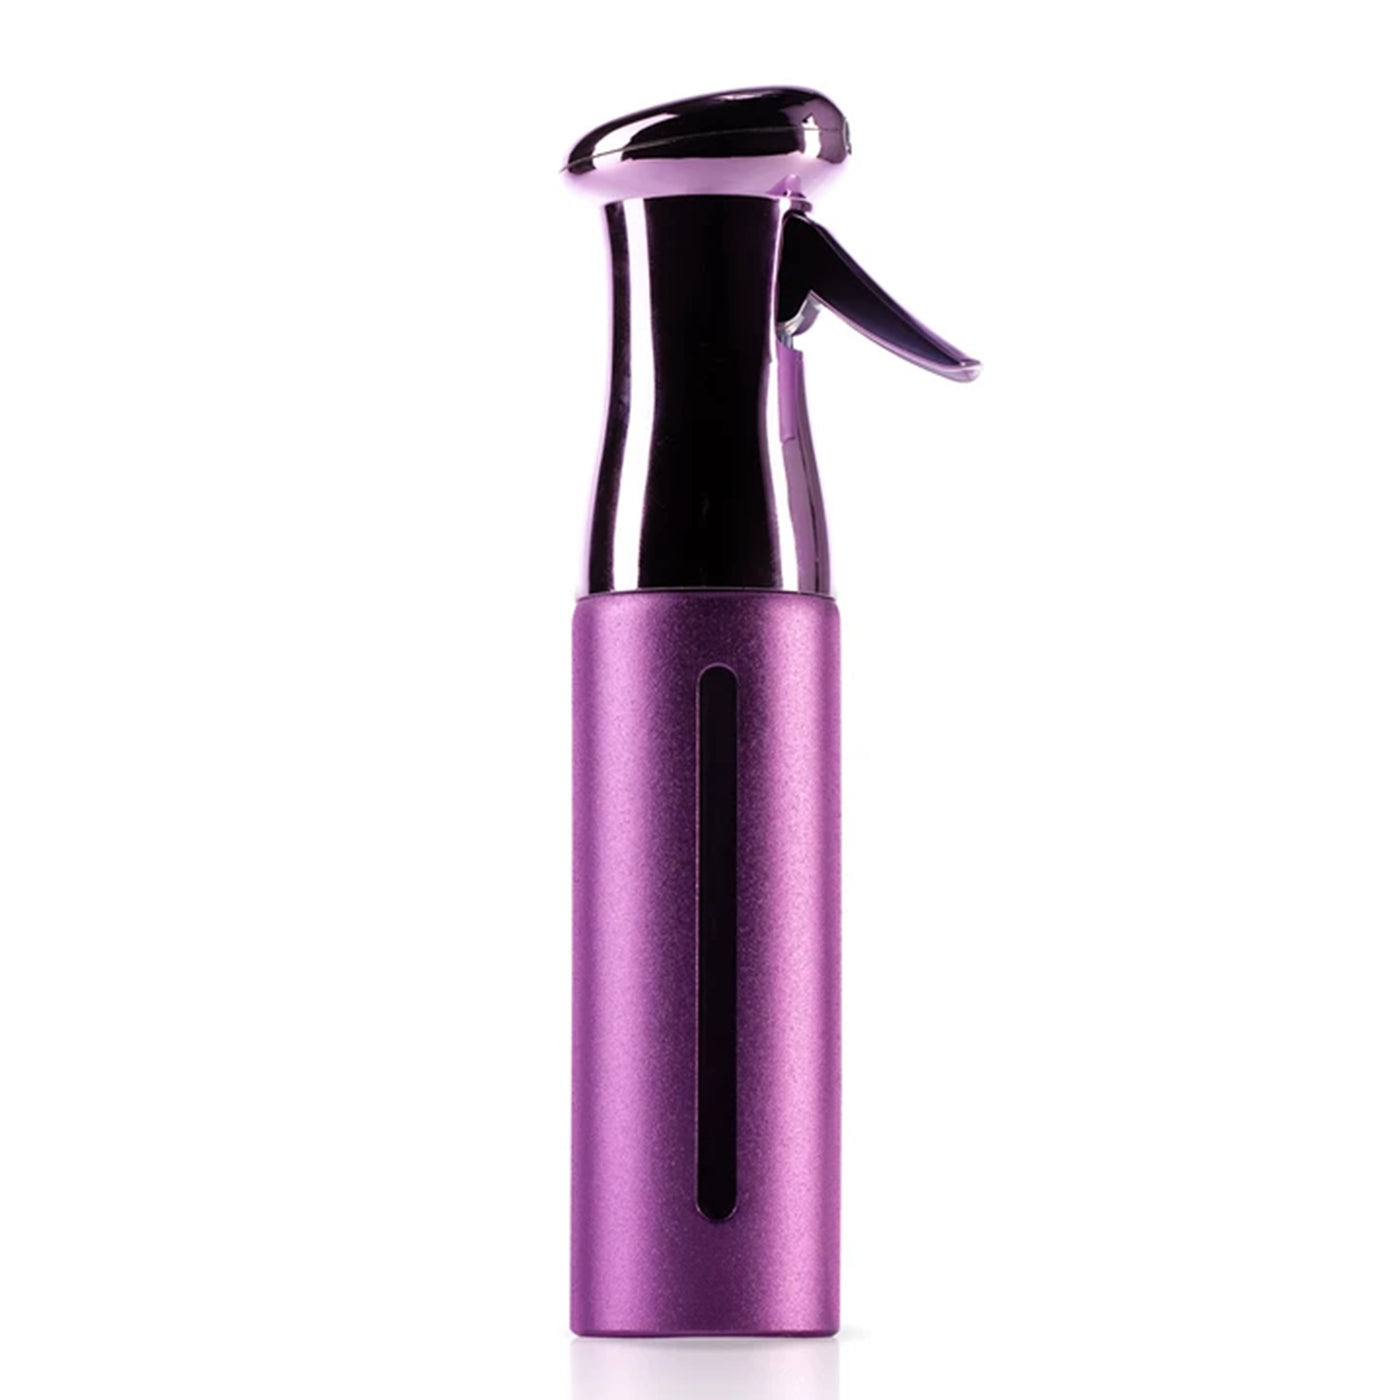 Luminous Spray Bottle - Lilac Frost 250ml